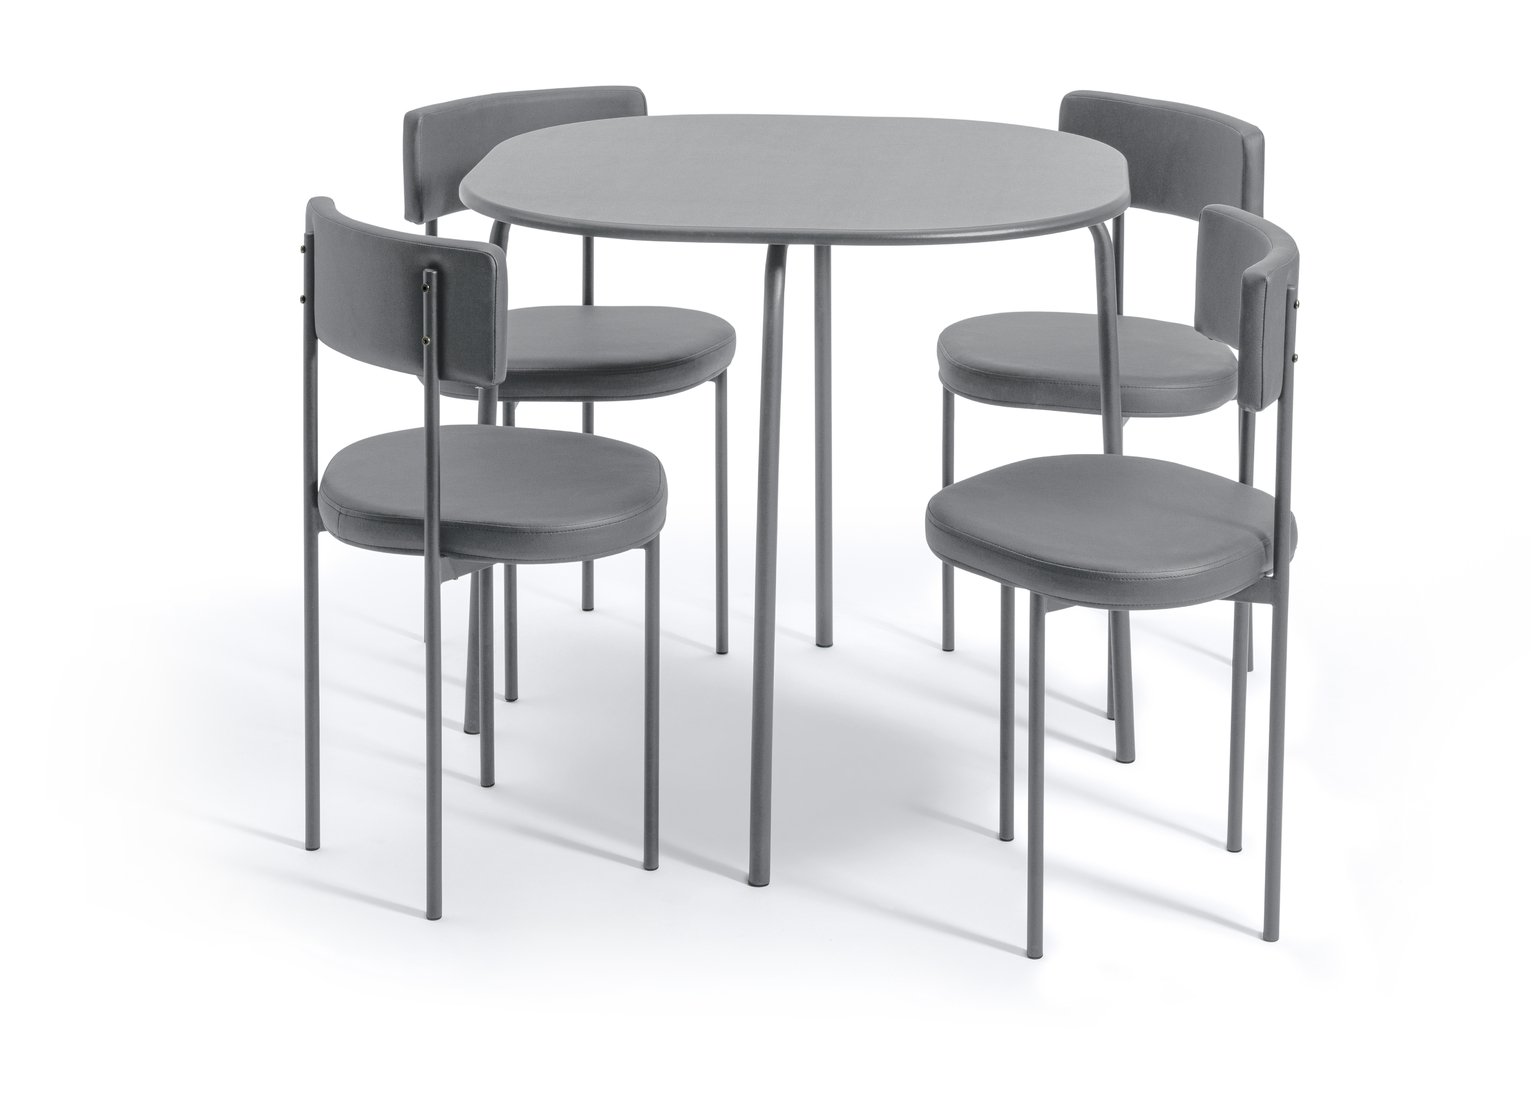 Habitat Jayla Wood Effect Dining Table & 4 Grey Chairs